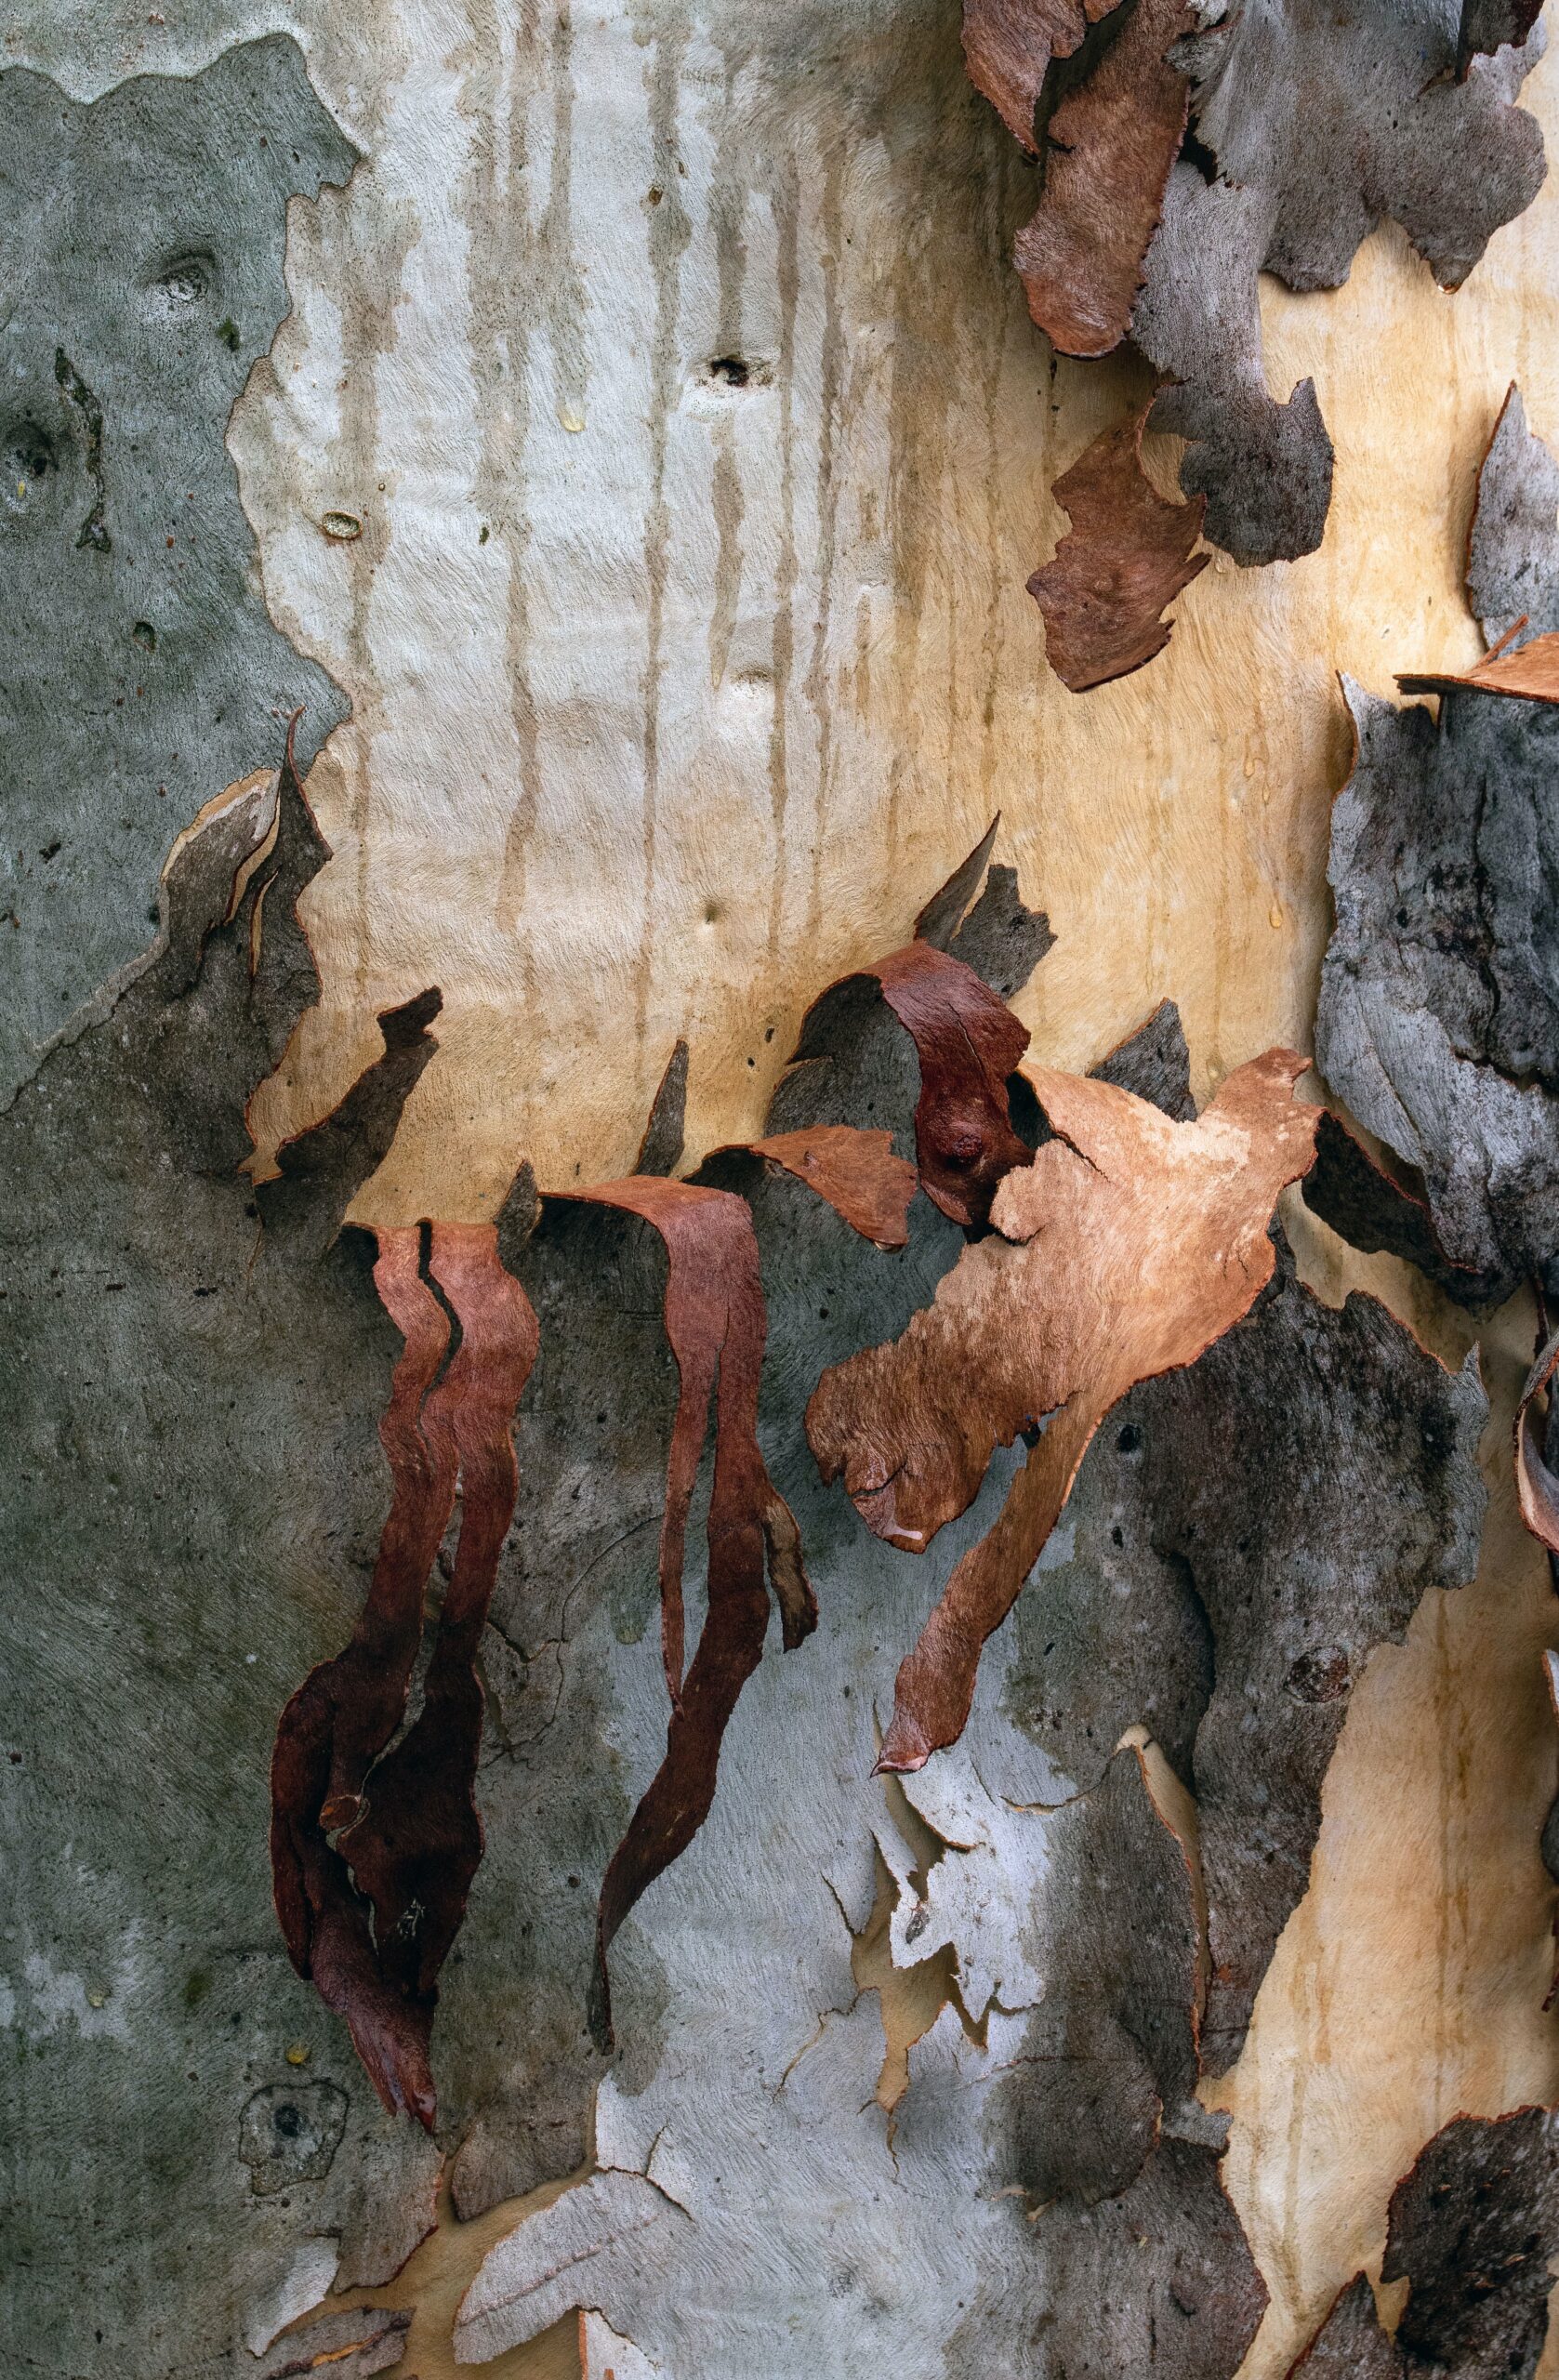 Peeling bark on a eucalypt